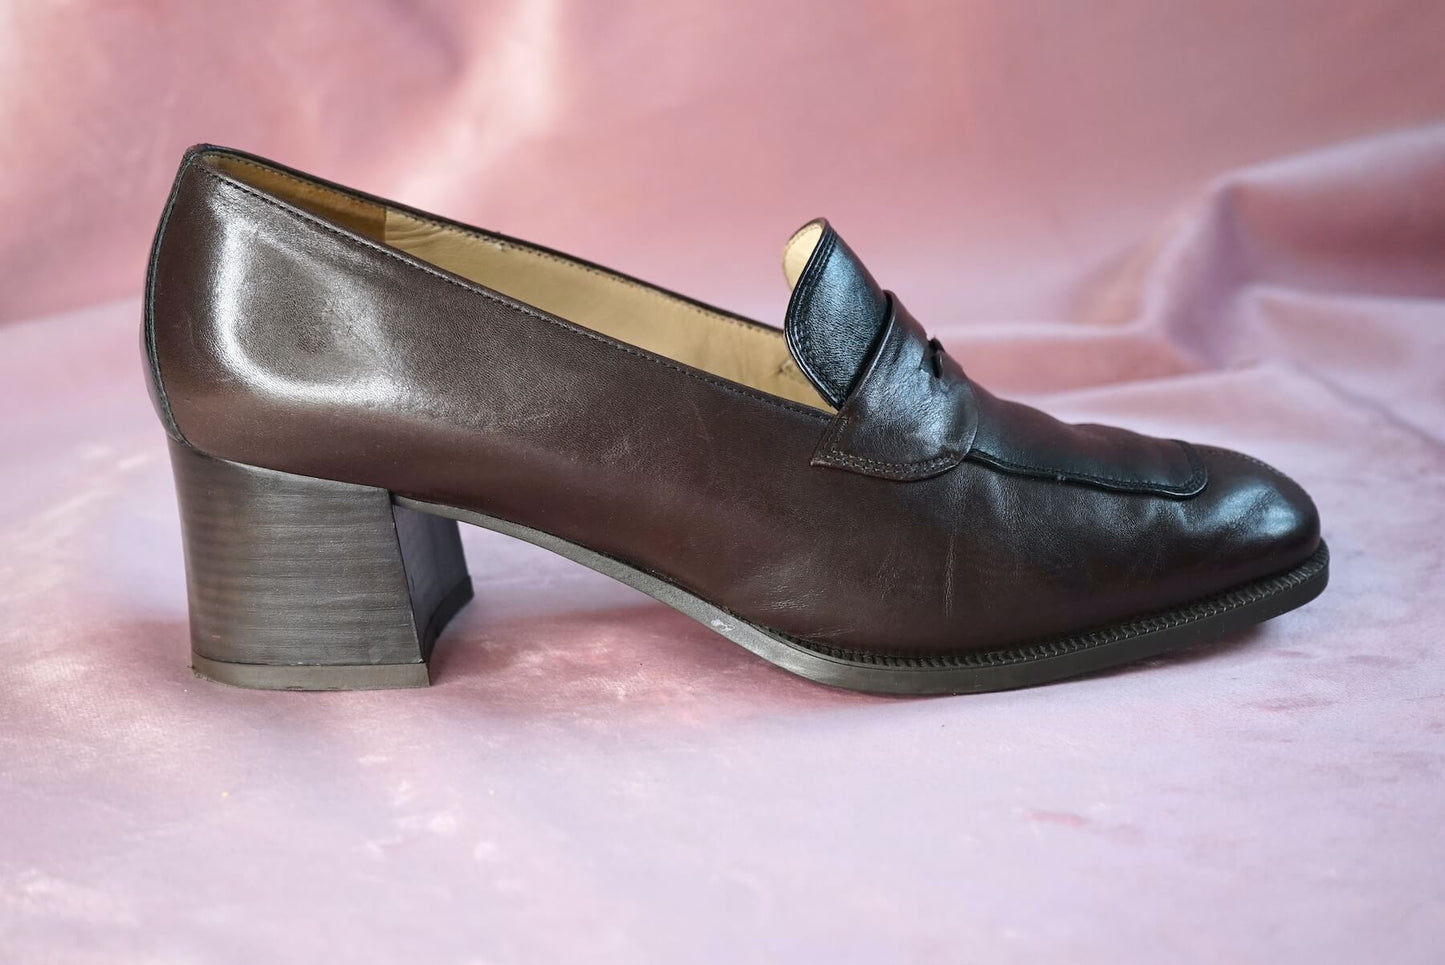 Salamander Vintage Leather Penny Court Shoes Black/Brown Size 7.5/40.5